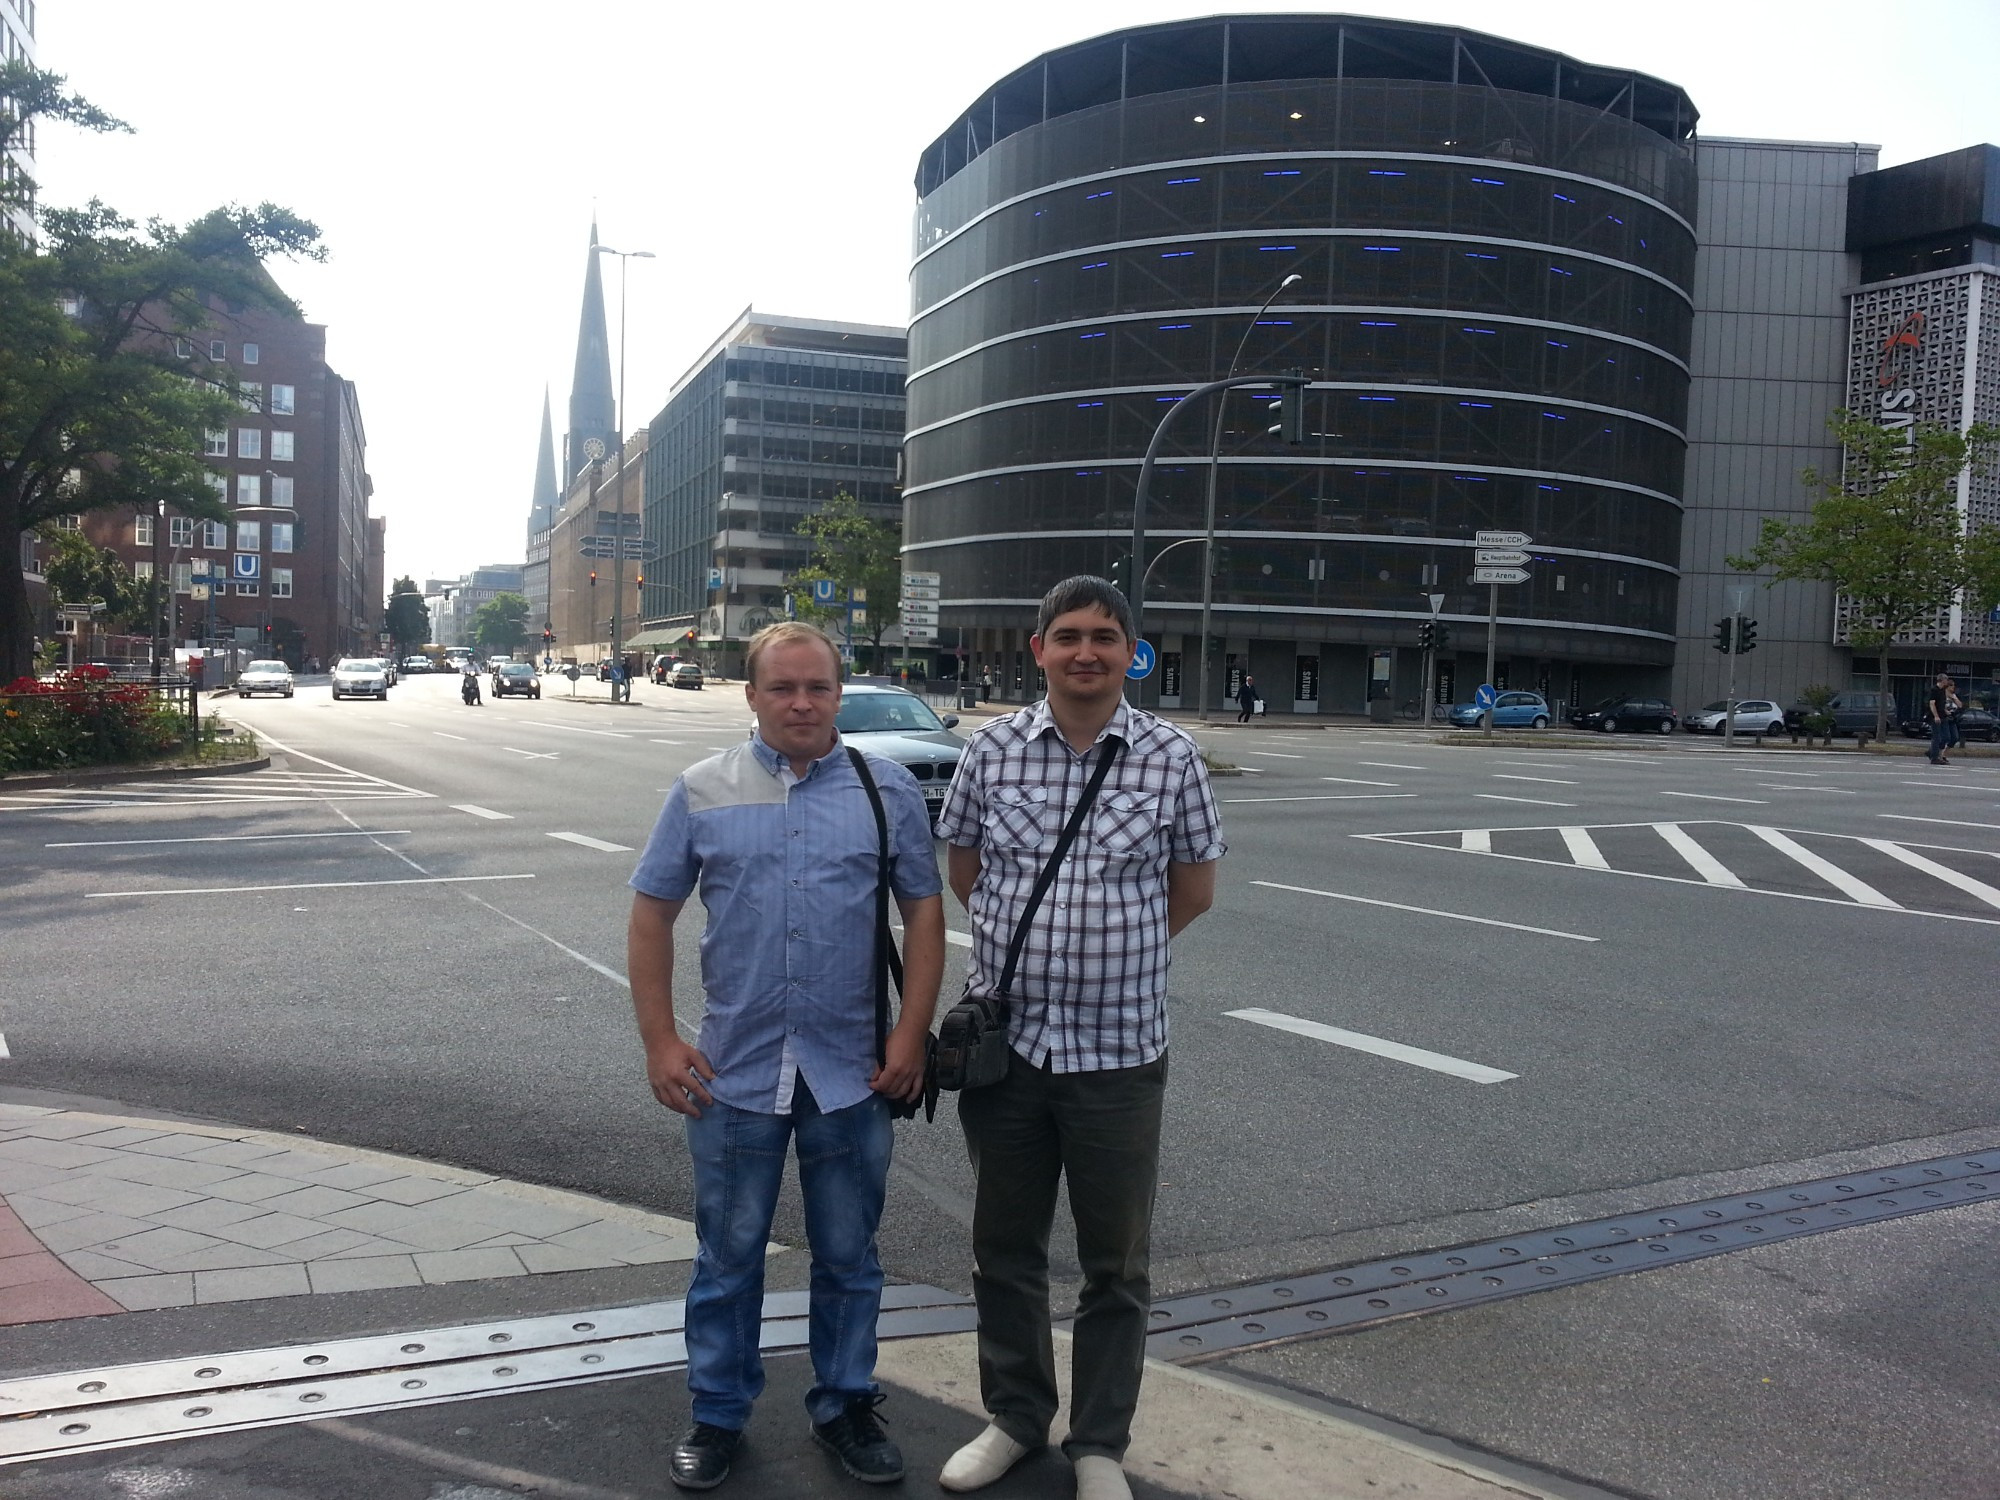 В Гамбурге. (15.07.2013)